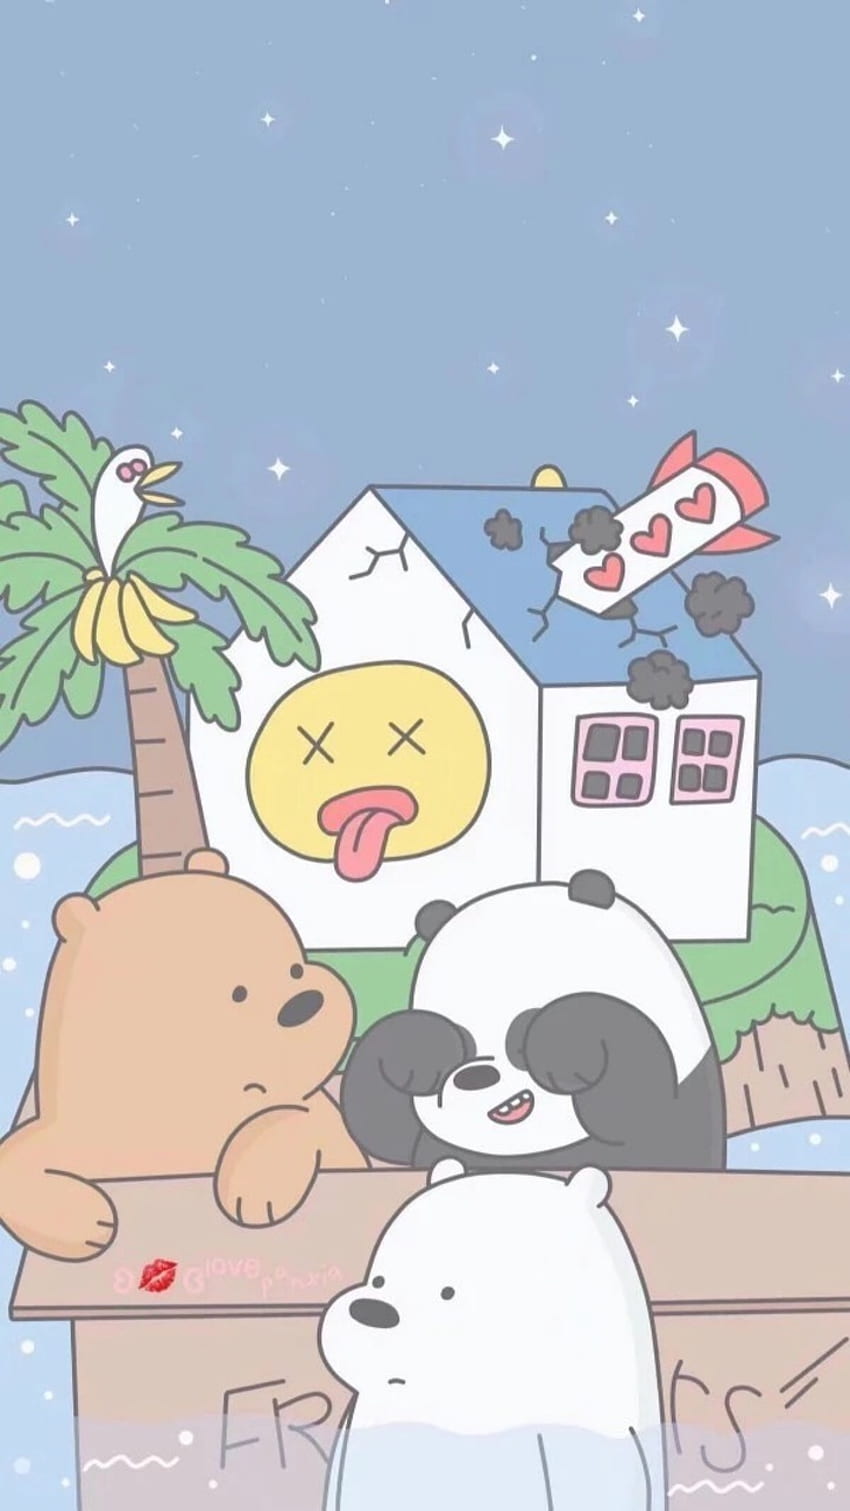 Cute Kawaii Panda With Heart Poster by kiwiprints